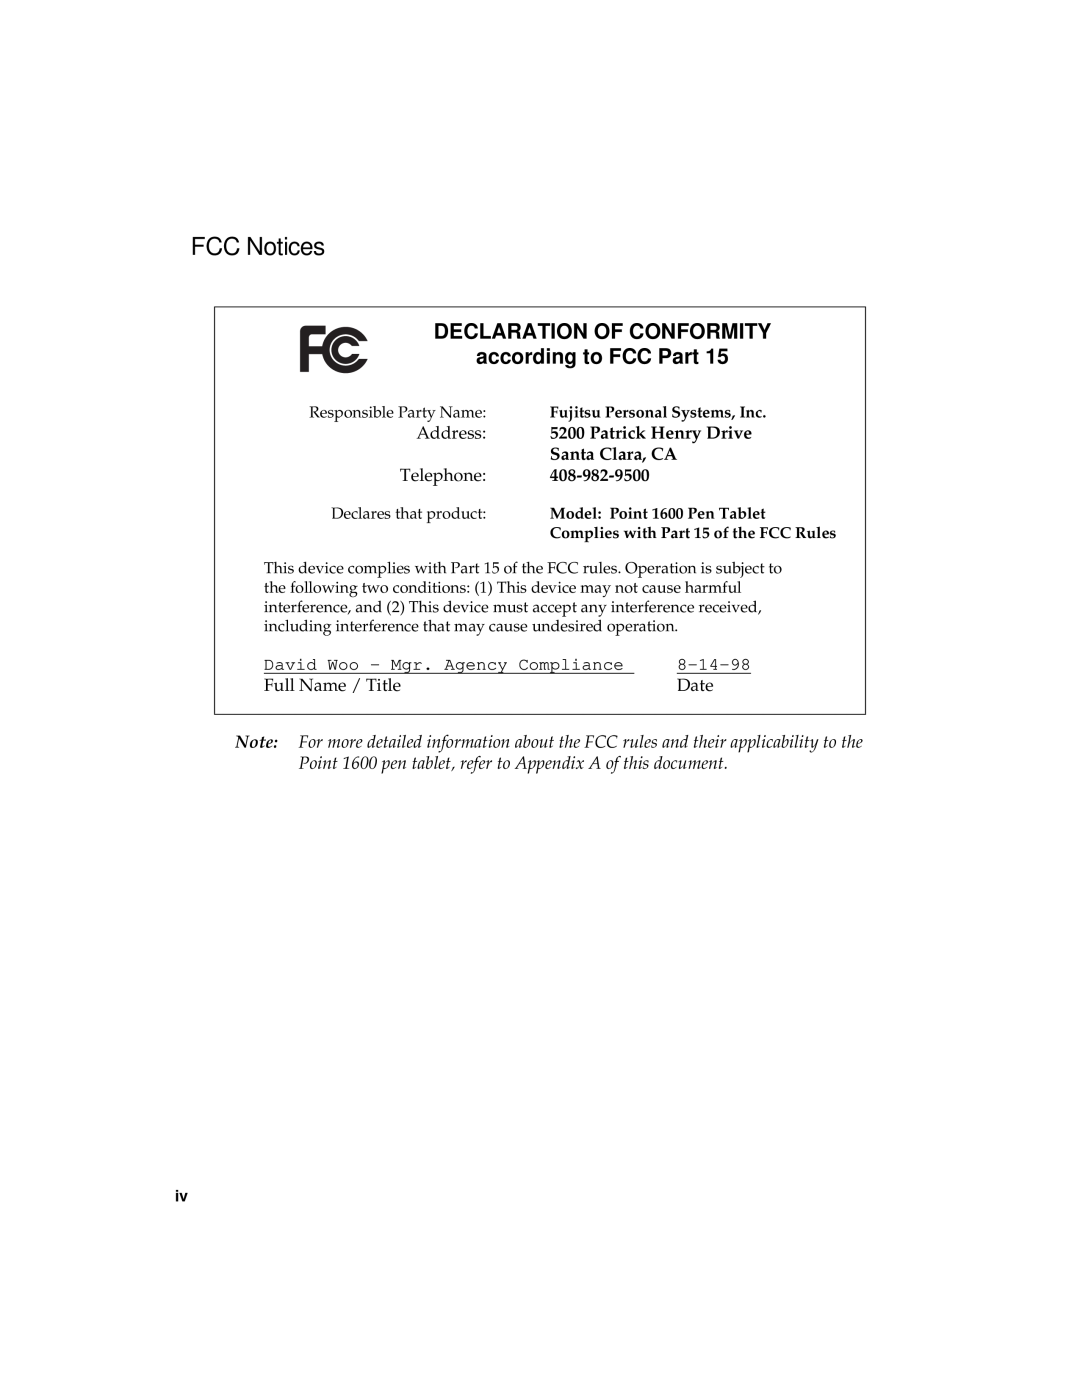 Fujitsu 1600 FCC Notices, DECLARATION OF CONFORMITY according to FCC Part, Address, Patrick Henry Drive, Santa Clara, CA 